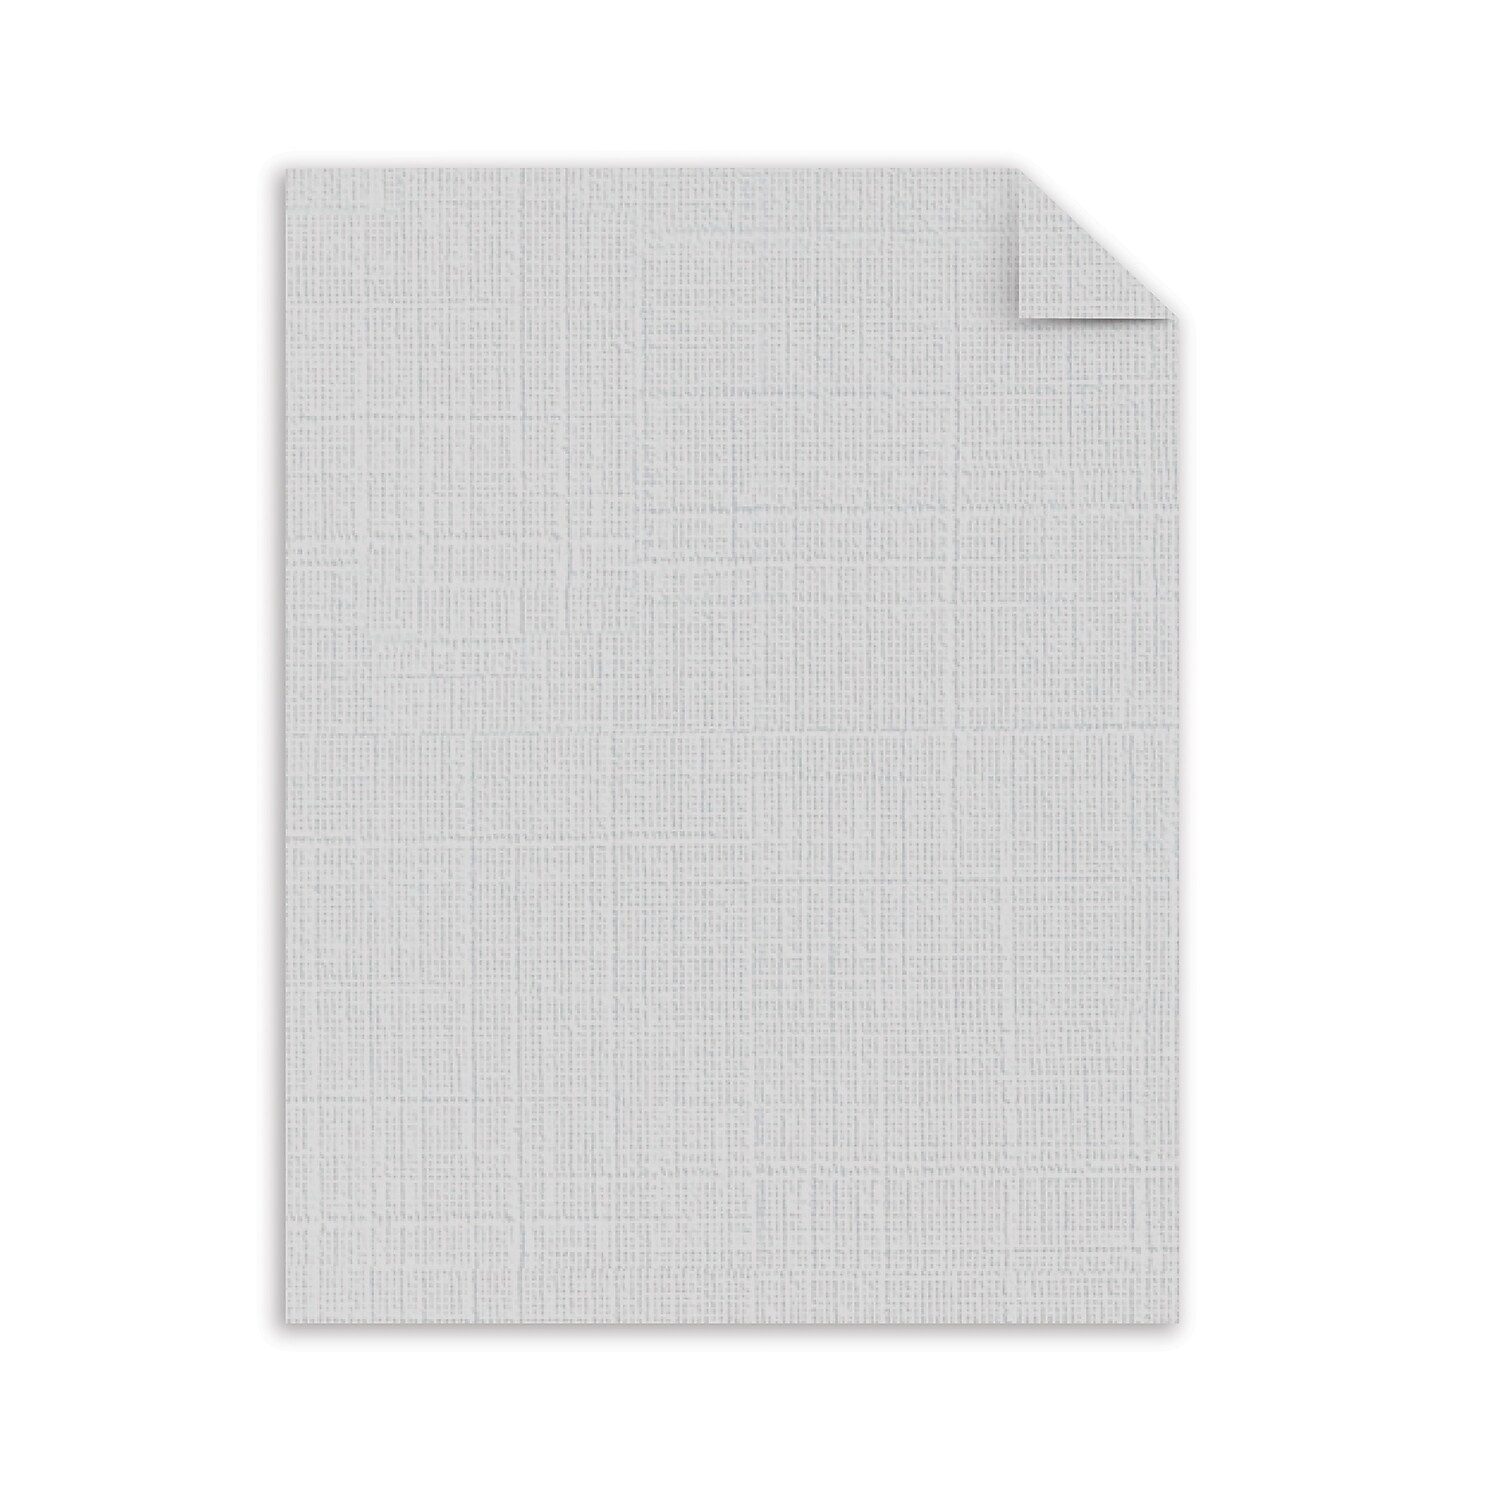 Southworth Cotton Linen Business Paper, 8-1/2" x 11", 24 lb., Gray, Box of 500 - image 3 of 4